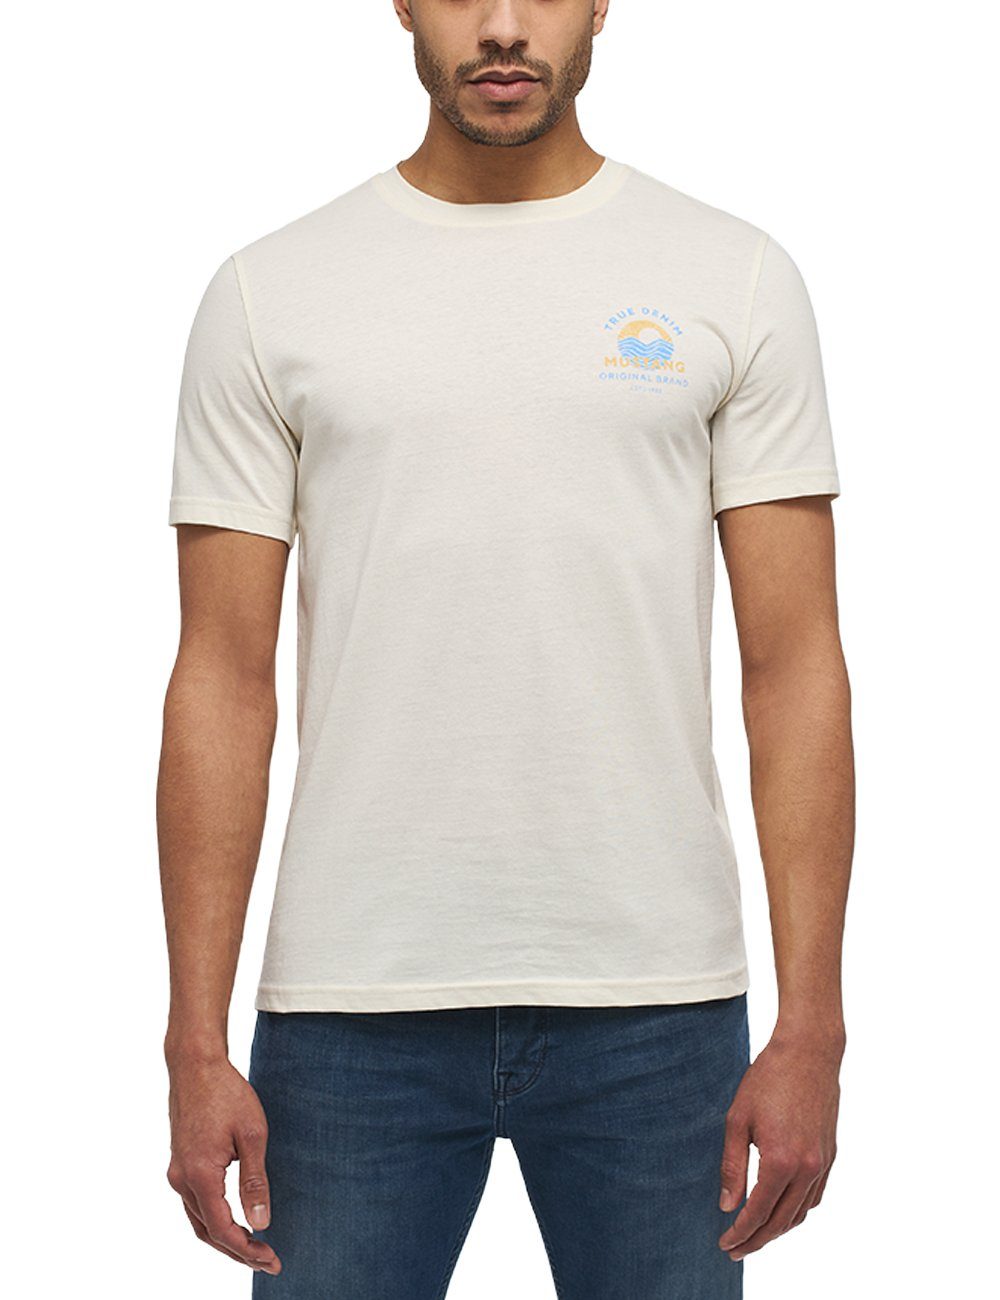 C Alex MUSTANG Style T-Shirt Print weiß